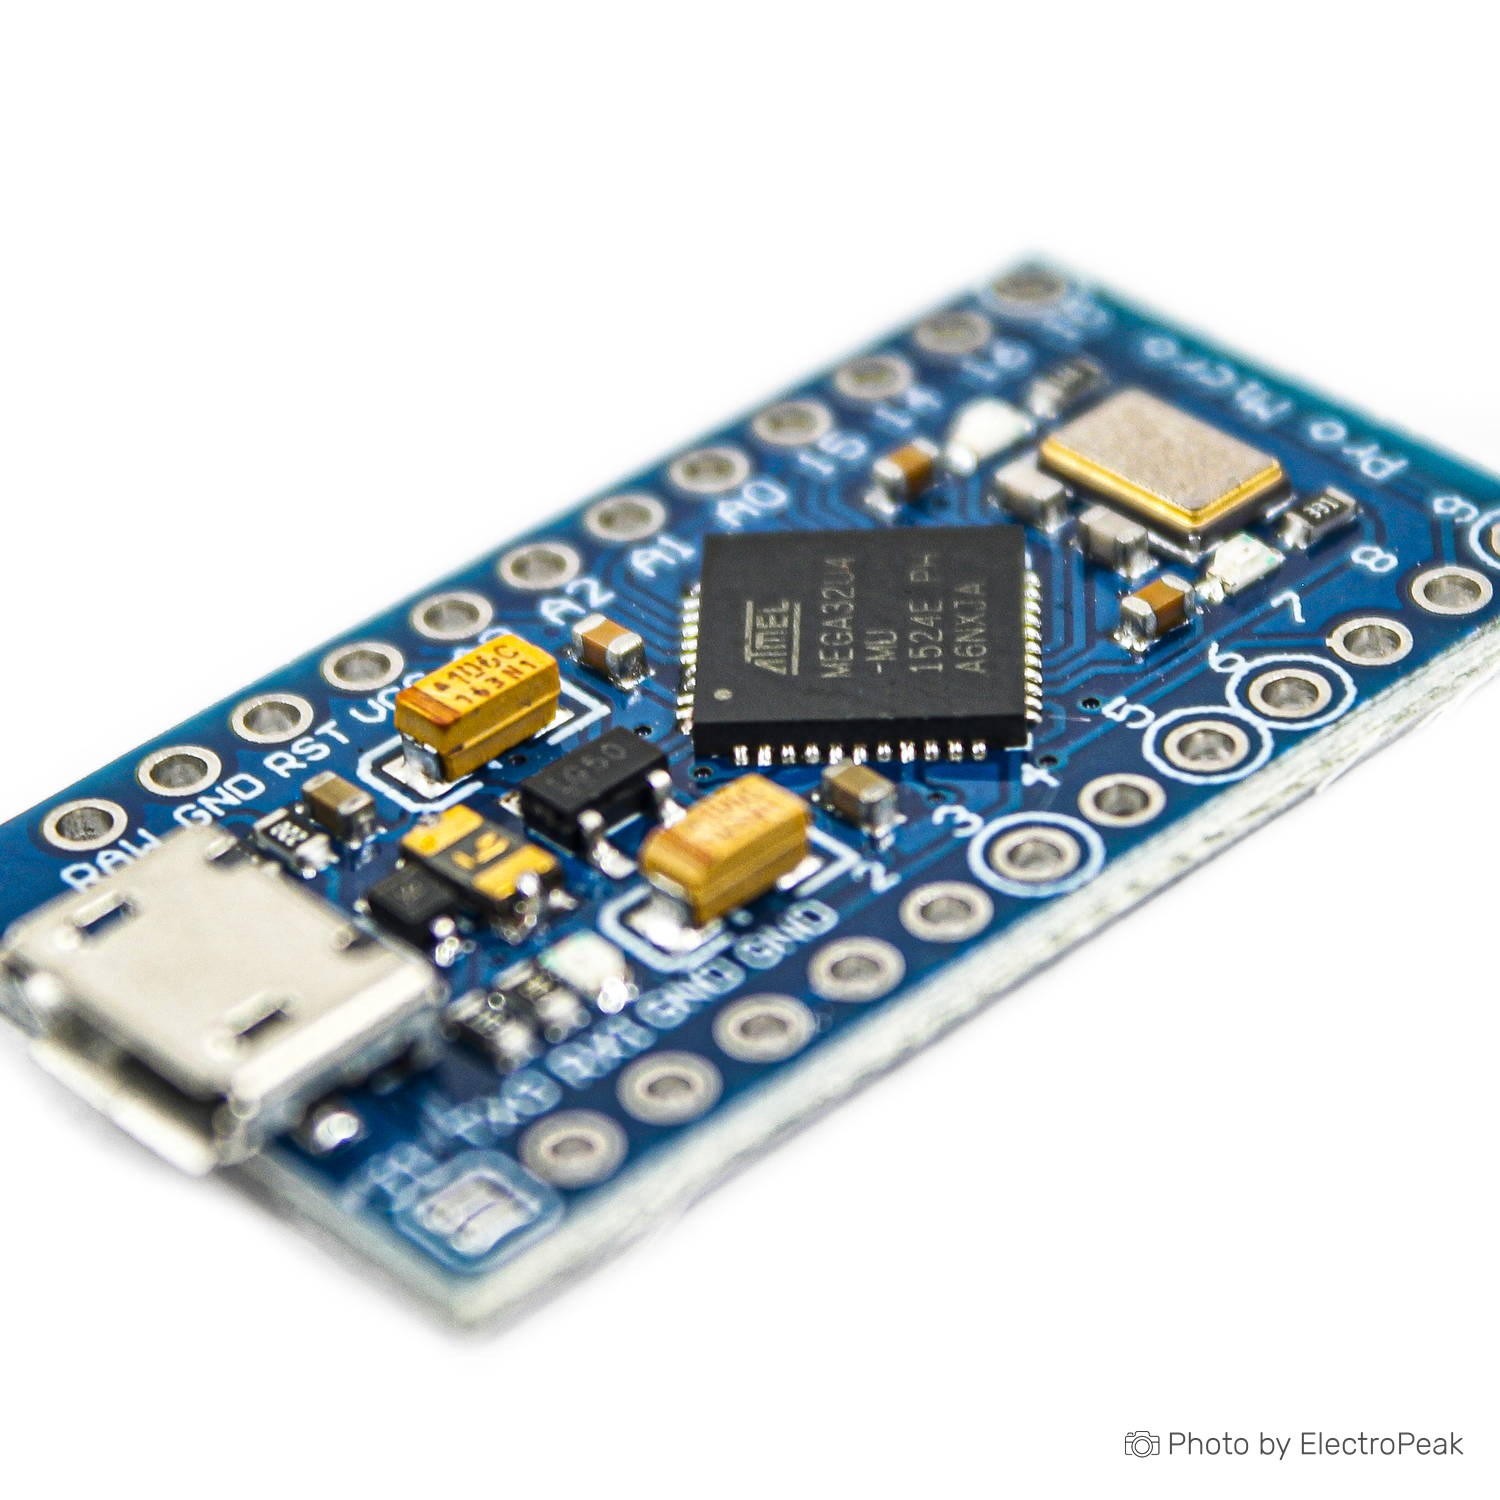 https://electropeak.com/pub/media/catalog/product/cache/95f75205f3b943f313b30831421df8c2/a/r/ard-01-023-6-pro-micro-arduino-board.jpg